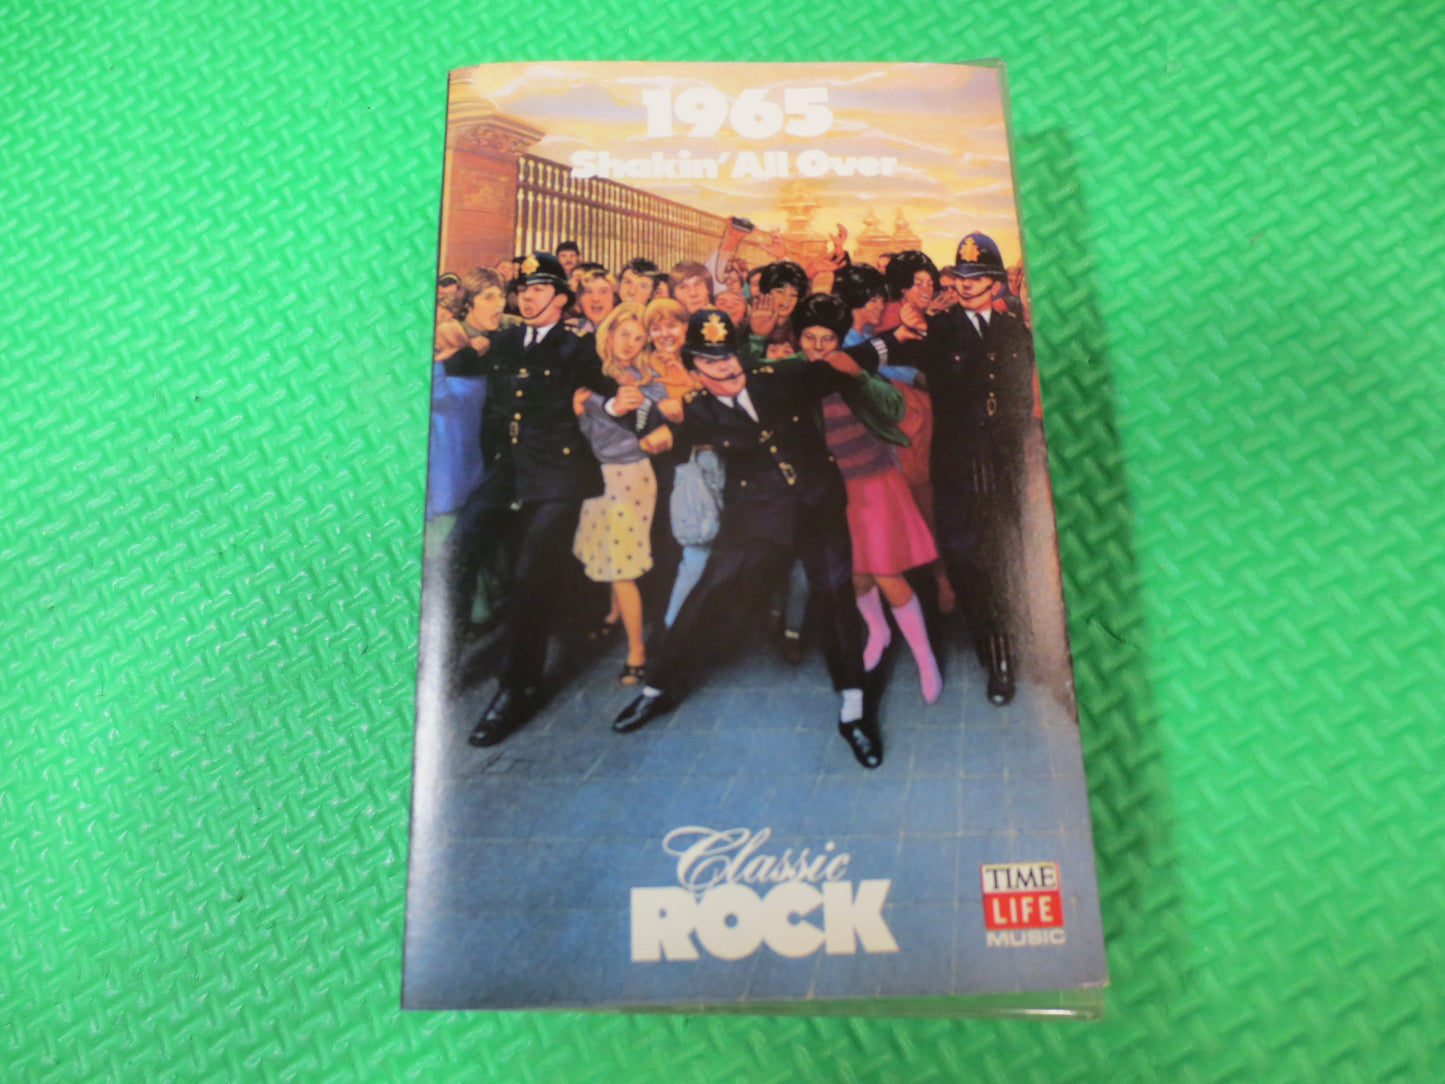 CLASSIC ROCK Tape, SHAKIN' All Over, Time Life Tape, 1965 Album, 1965 Music, Cassette, Classic Rock, Rock Lp, 1989 Cassette